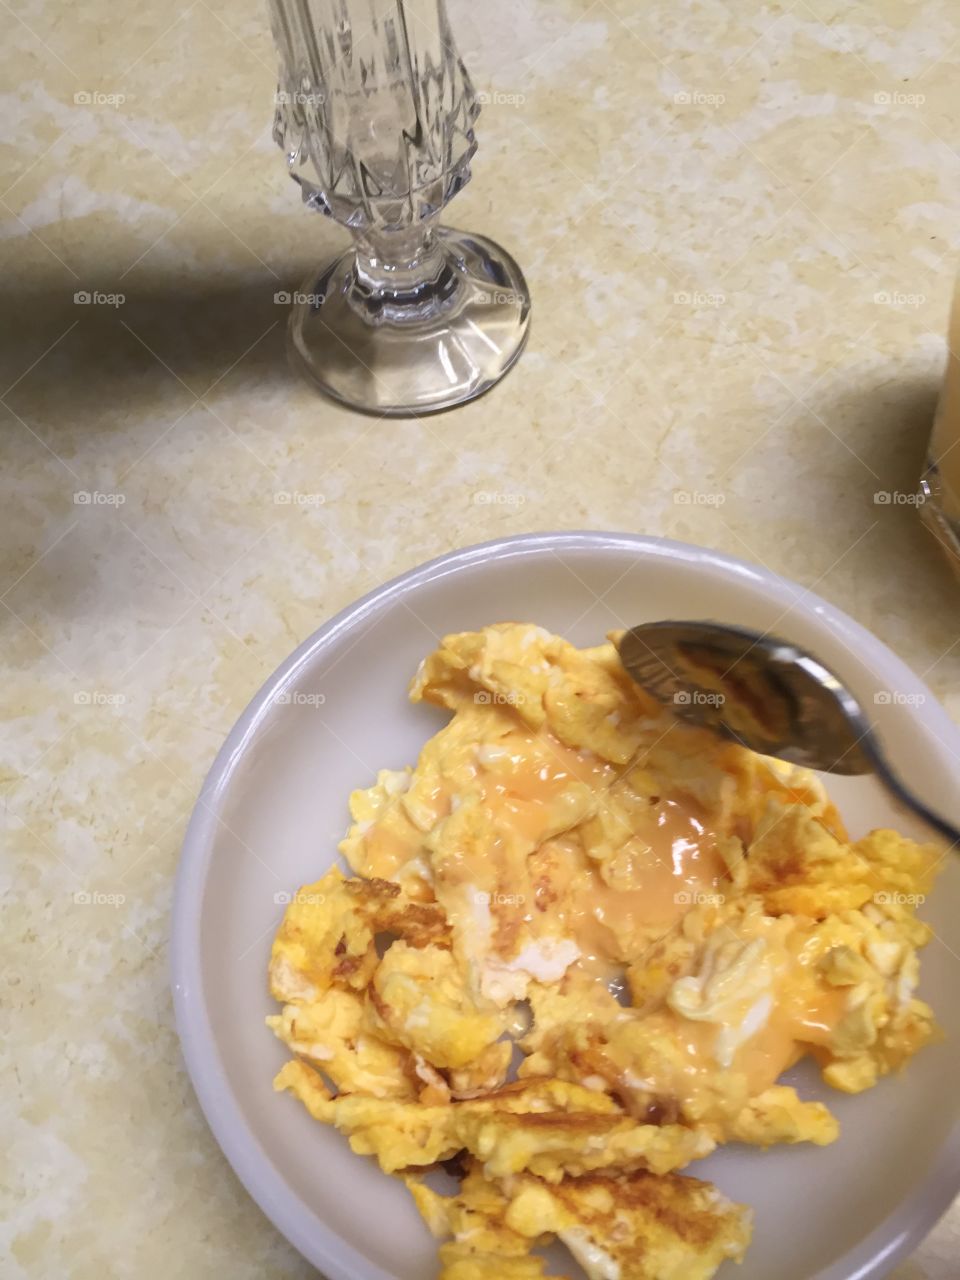 Morning ritual eating scrambled eggs